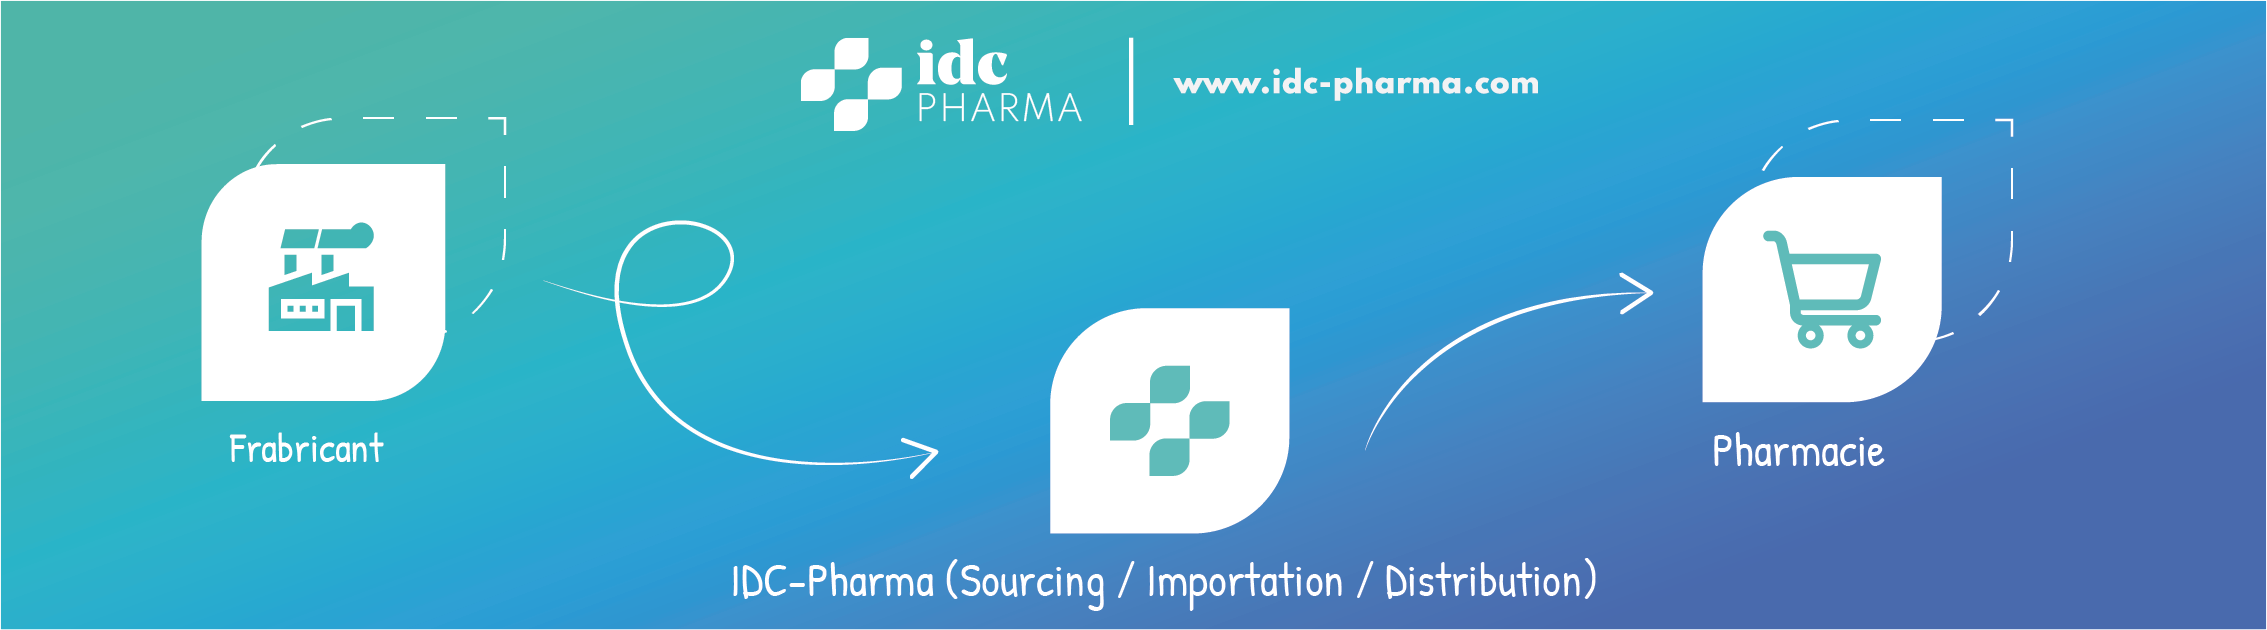 IDC-Pharma: Facilitateur du Pharmacien